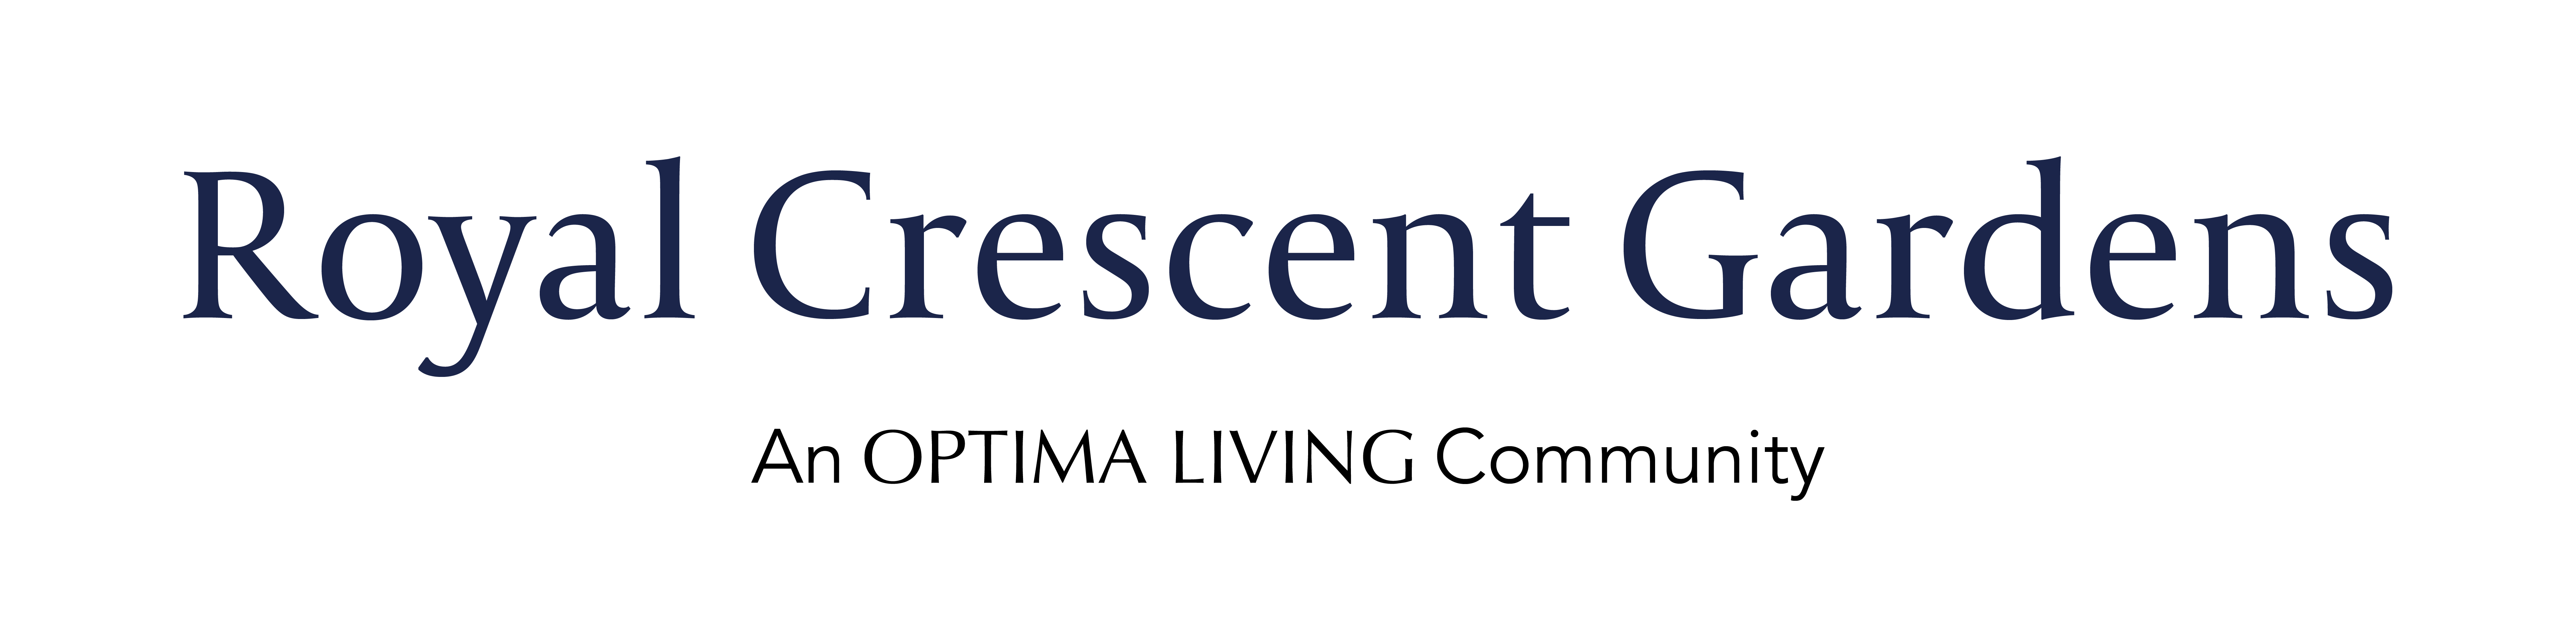 Royal Crescent Gardens Logo